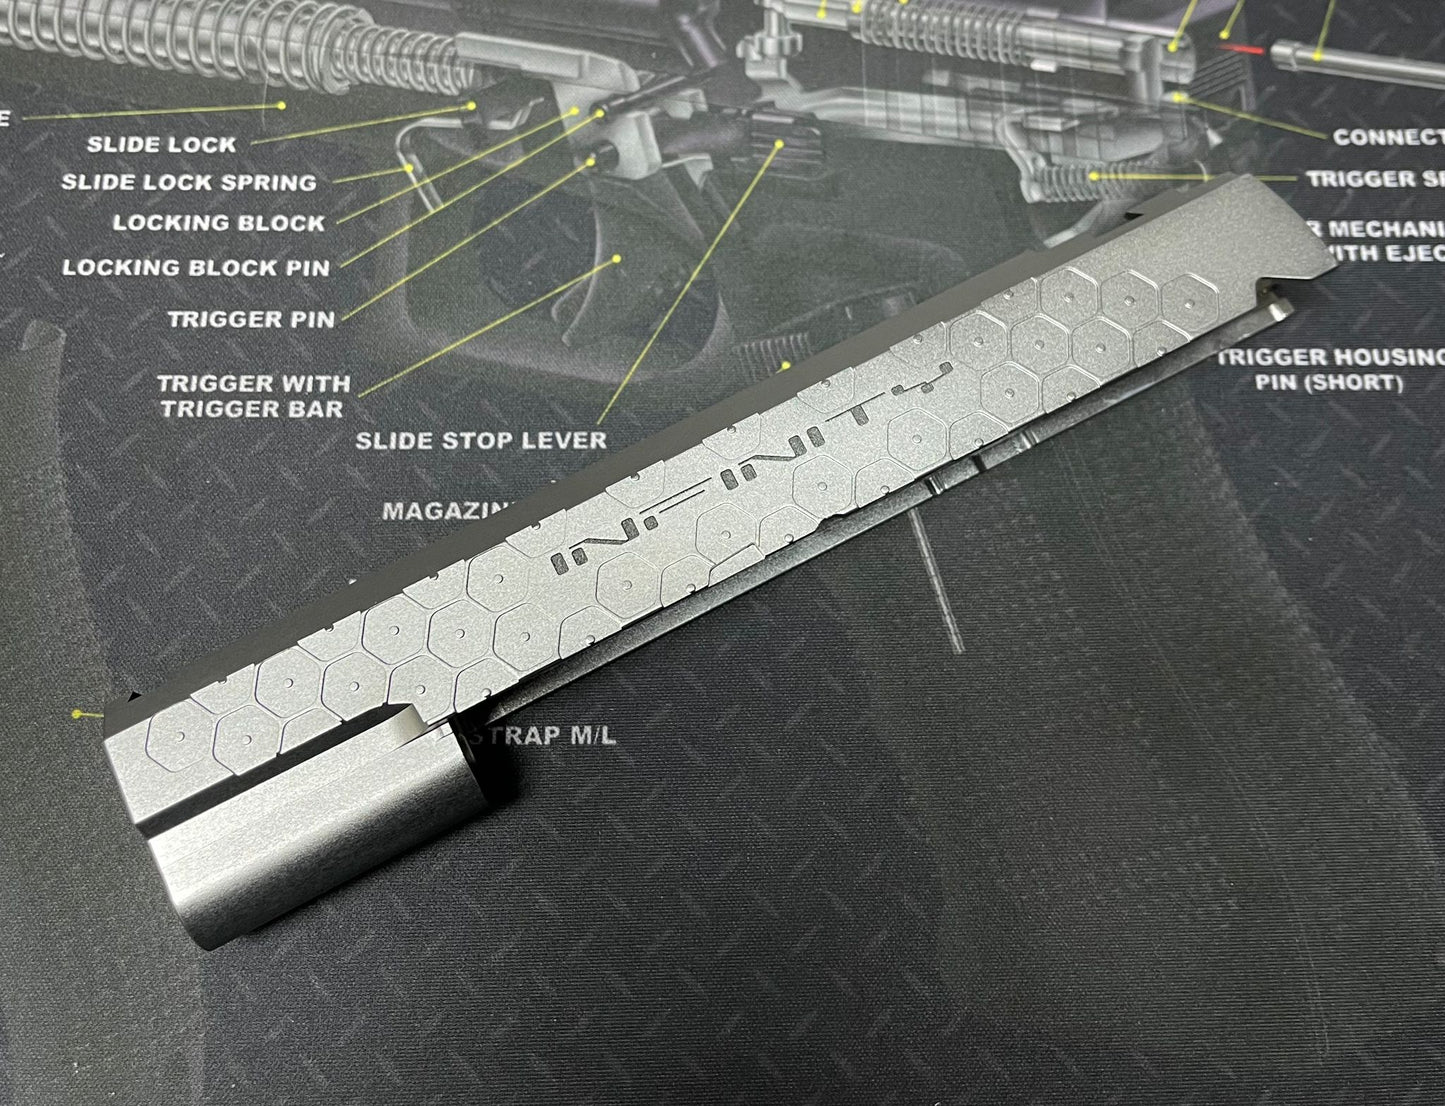 Bomber CNC Aluminum ( HEX style ) slide for TM Airsoft Hi-Capa GBB Pistol series